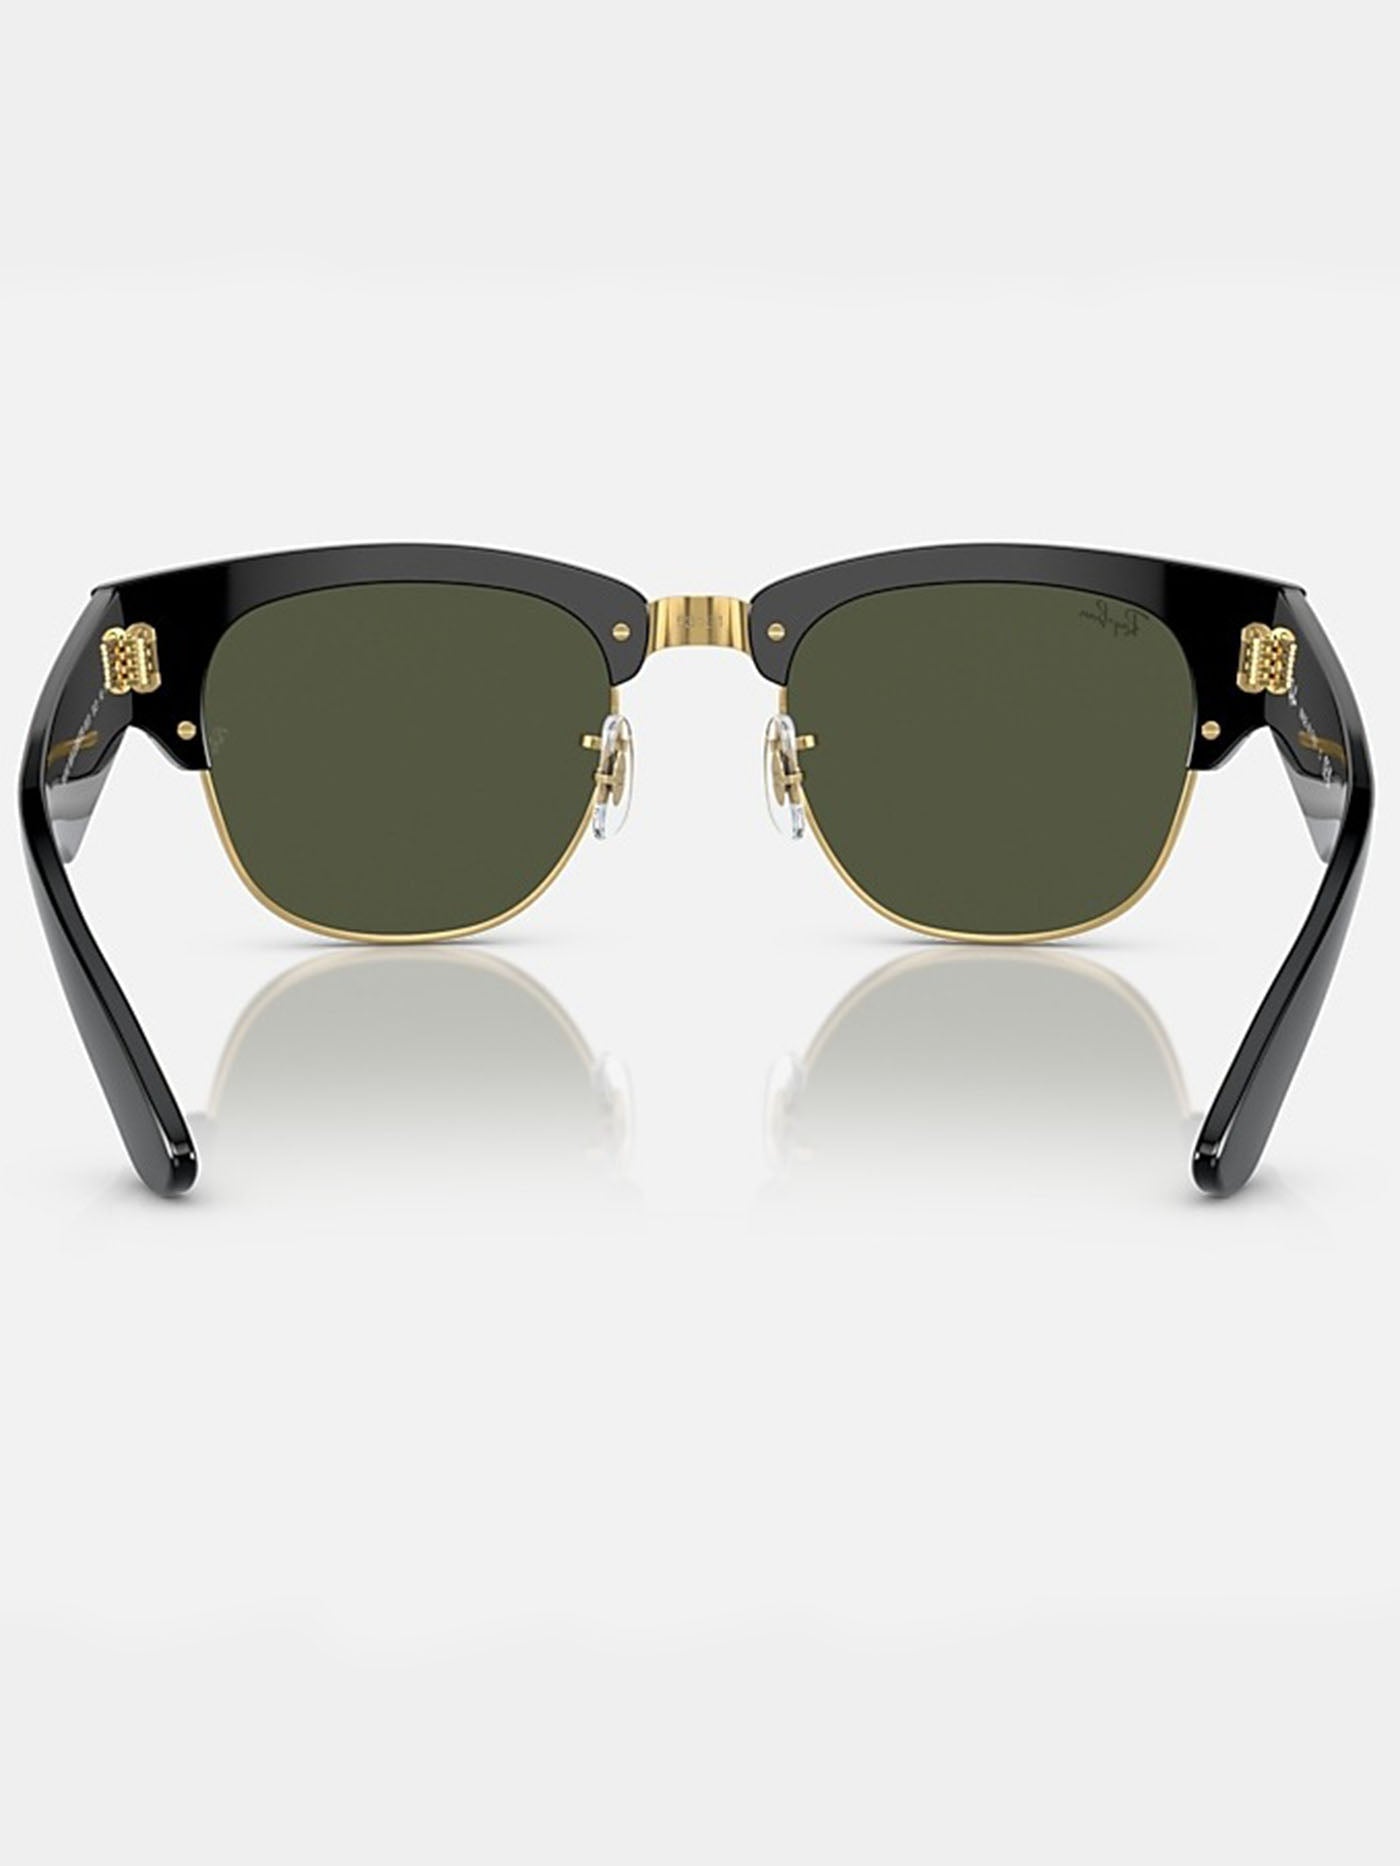 Ray Ban 2024 Mega Clubmaster Black On Gold/Green Classic G-15 Sunglasses